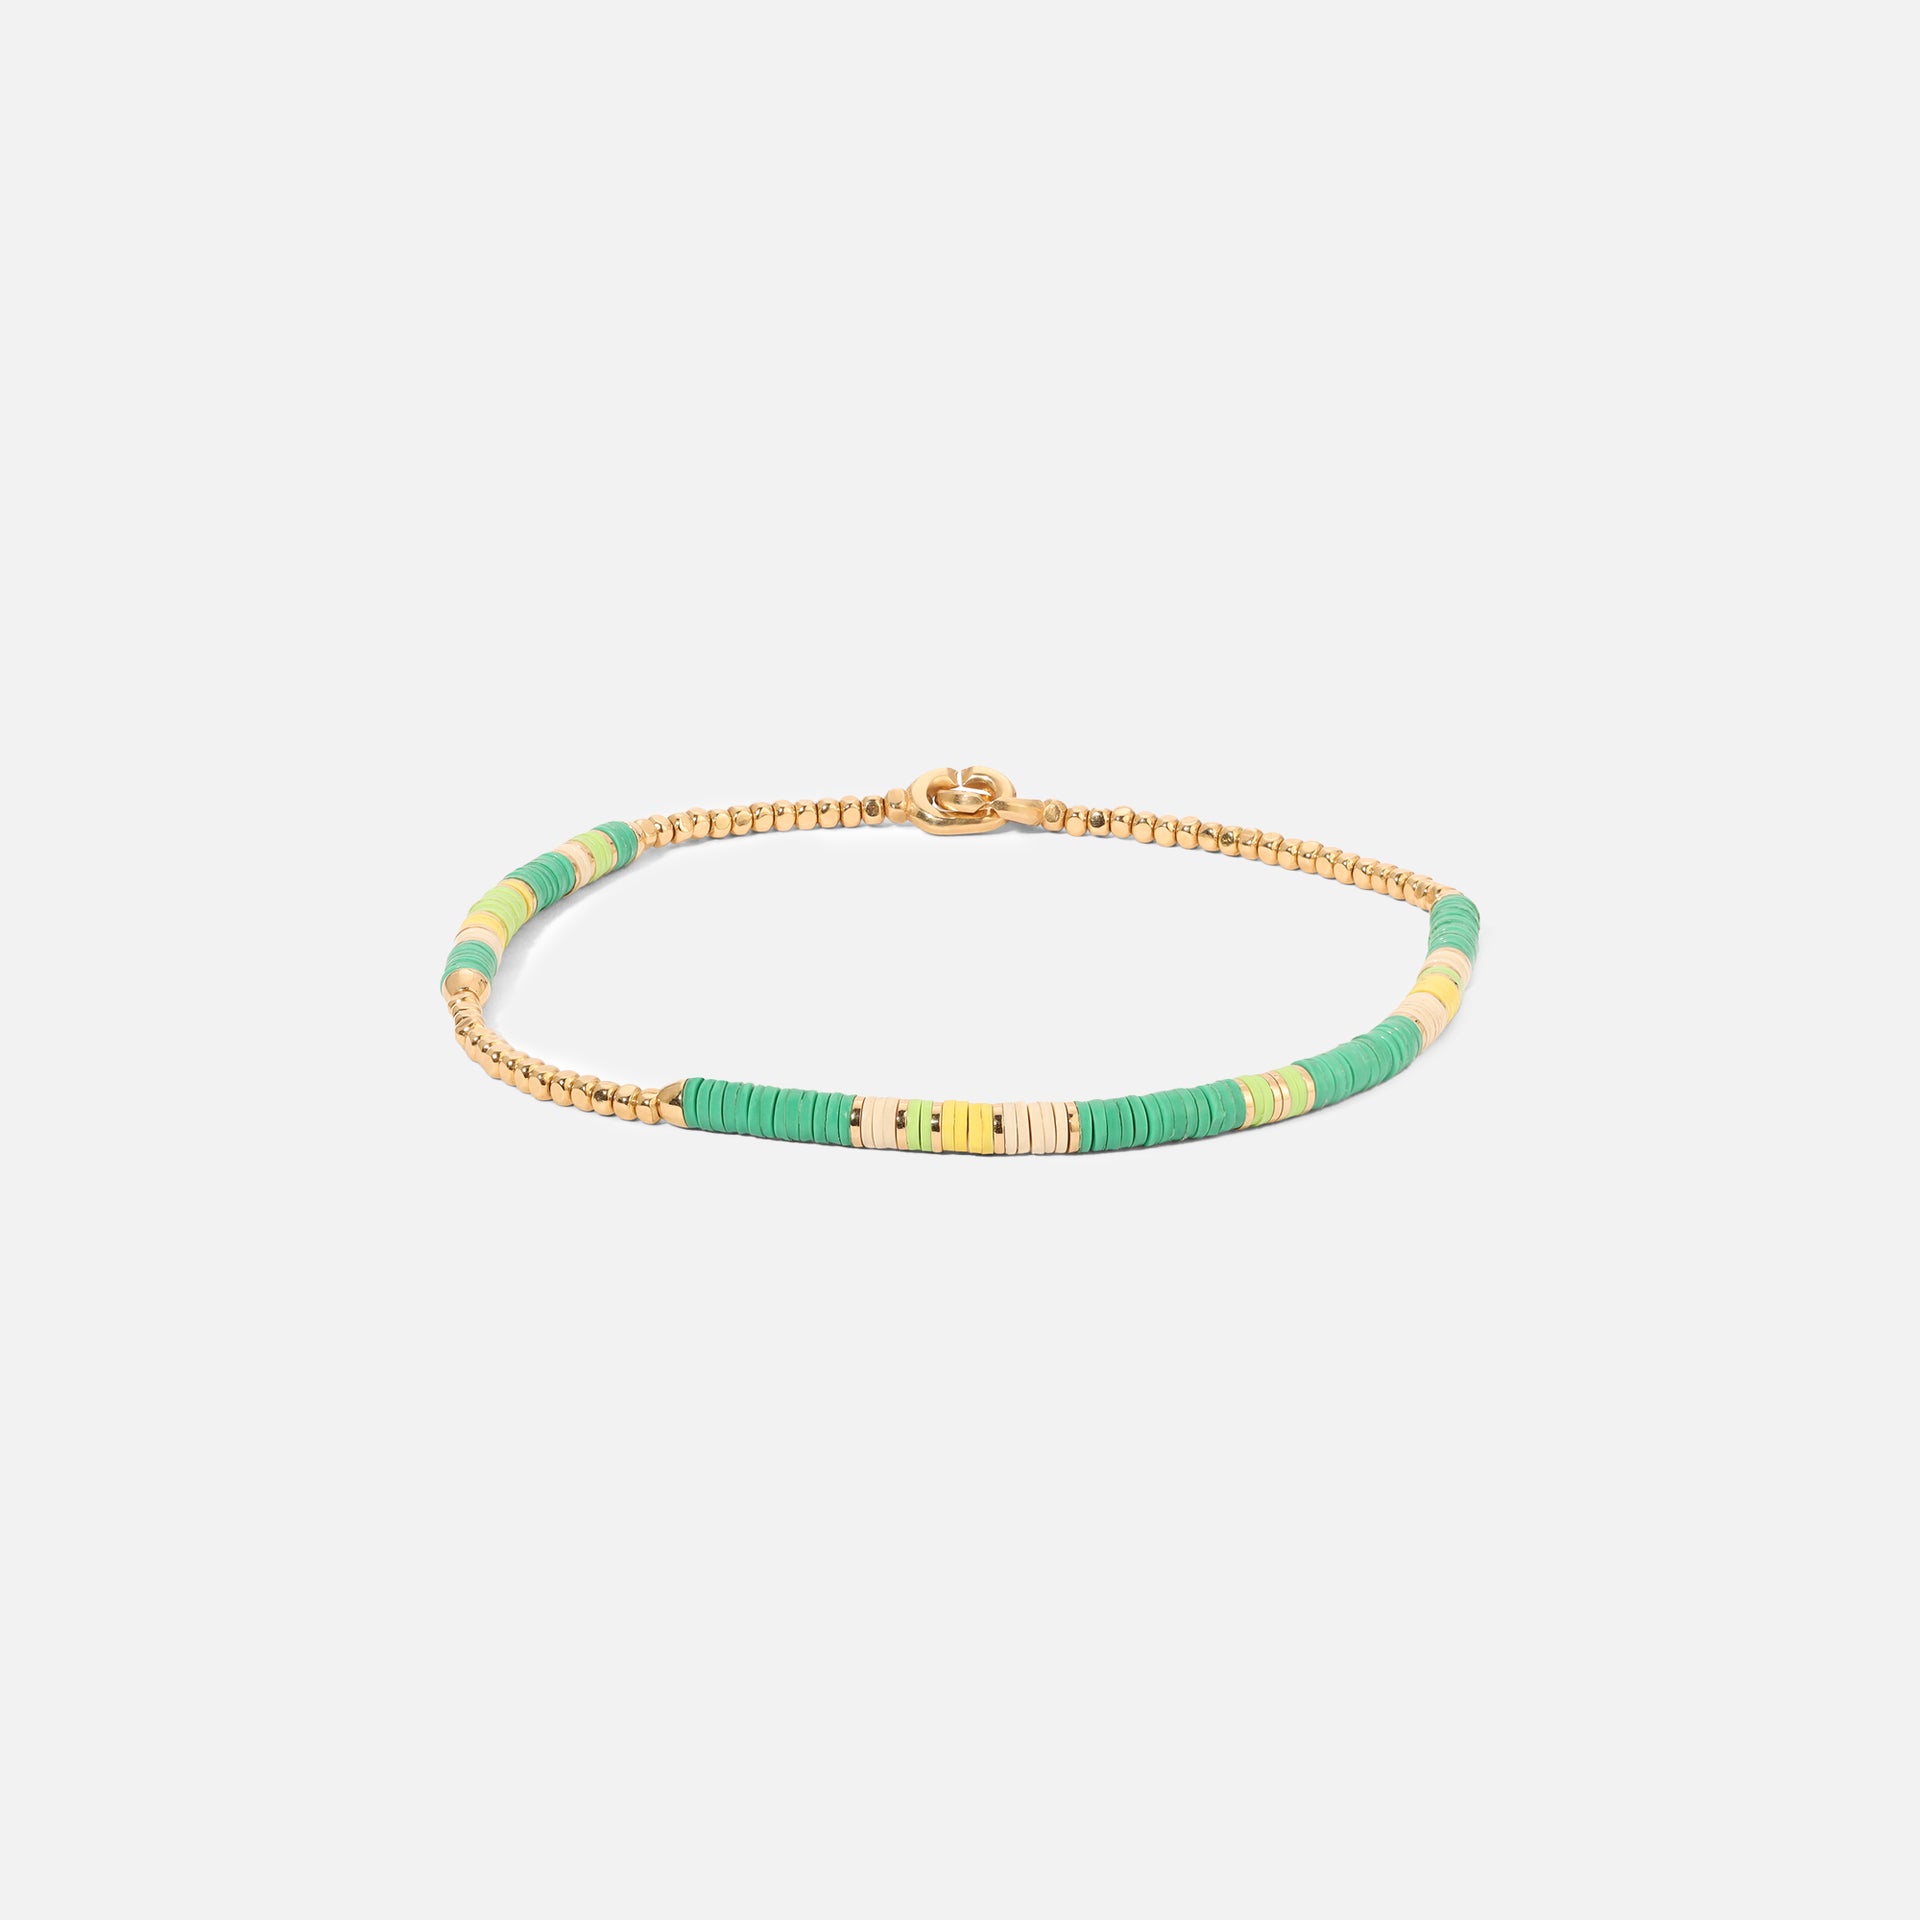 Maor Shine Bracelet Green Pattern Beads with 18k Yellow Gold - Gold / Green